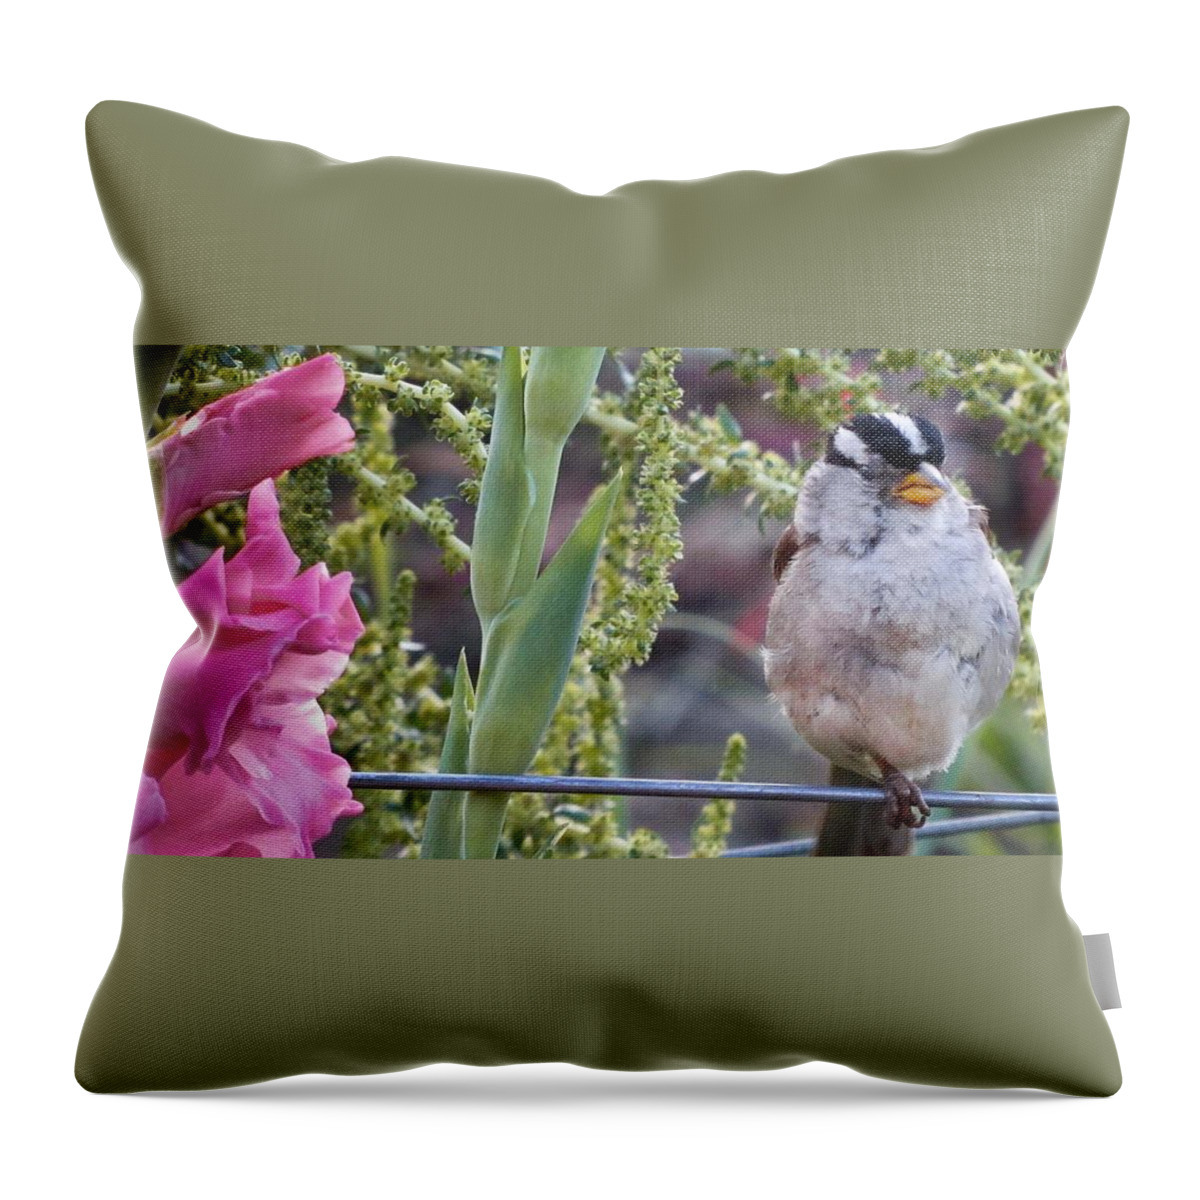 Bird Throw Pillow featuring the photograph Seattle Bird by Natalie Rotman Cote